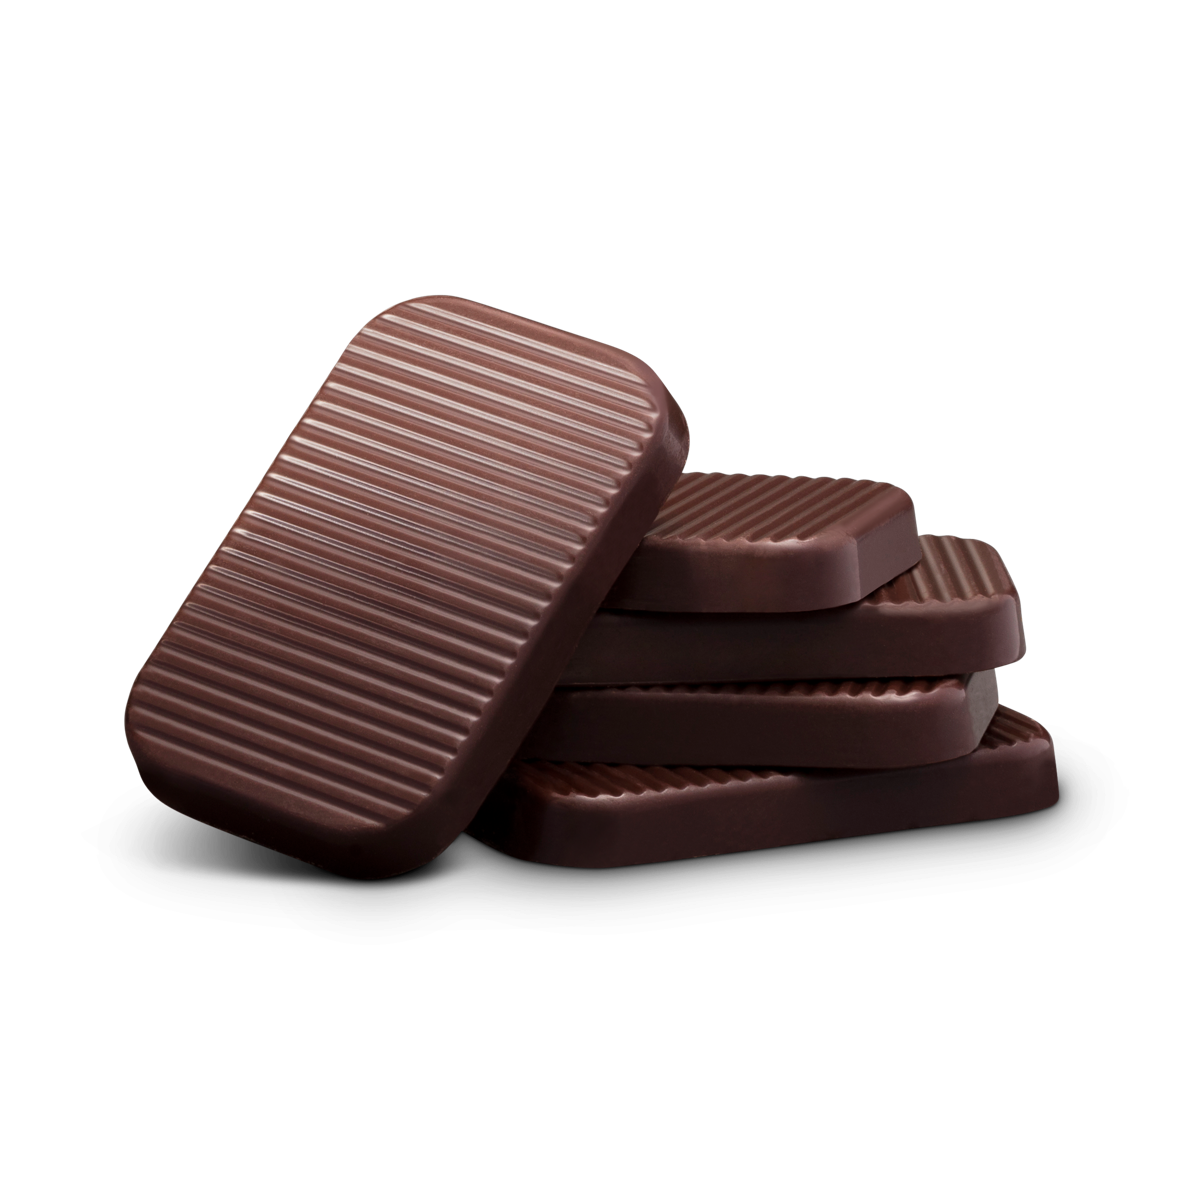 Dark Chocolate Expert Bundle (3 Pack)